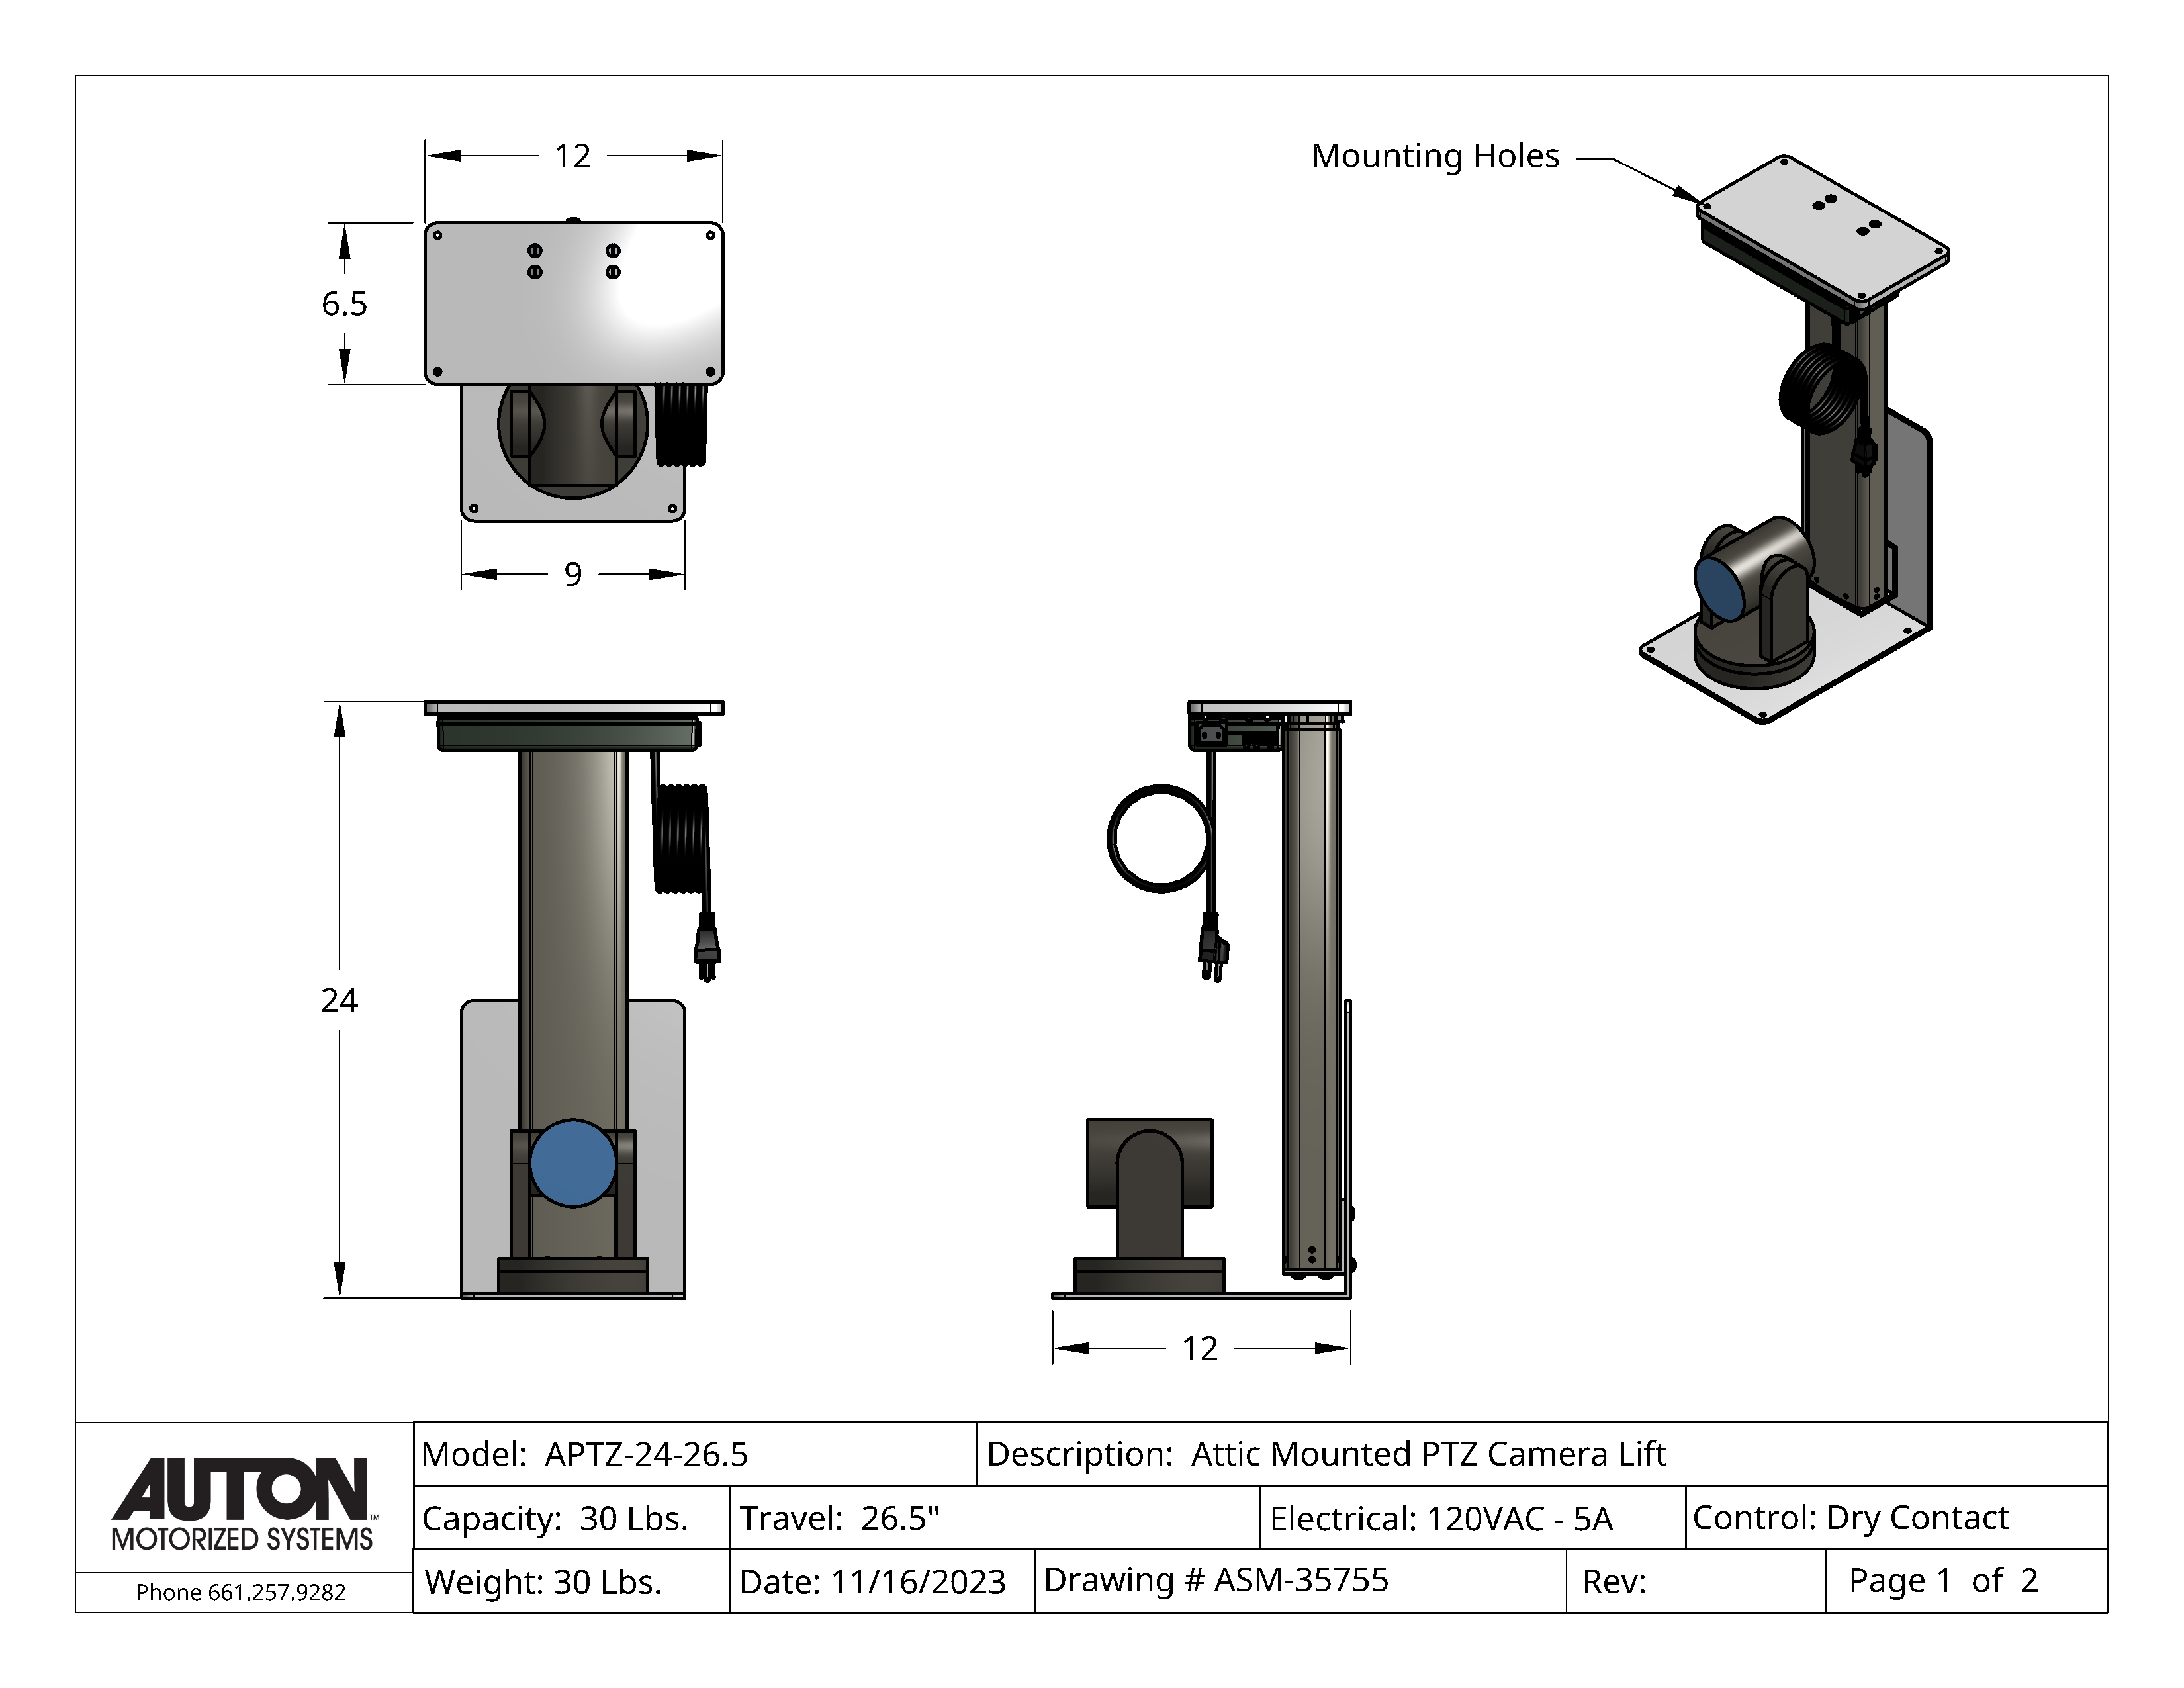 PTZ Camera Lift - Ceiling Mounted - Travel: 26.5 Inches - Model APTZ-24-26.5